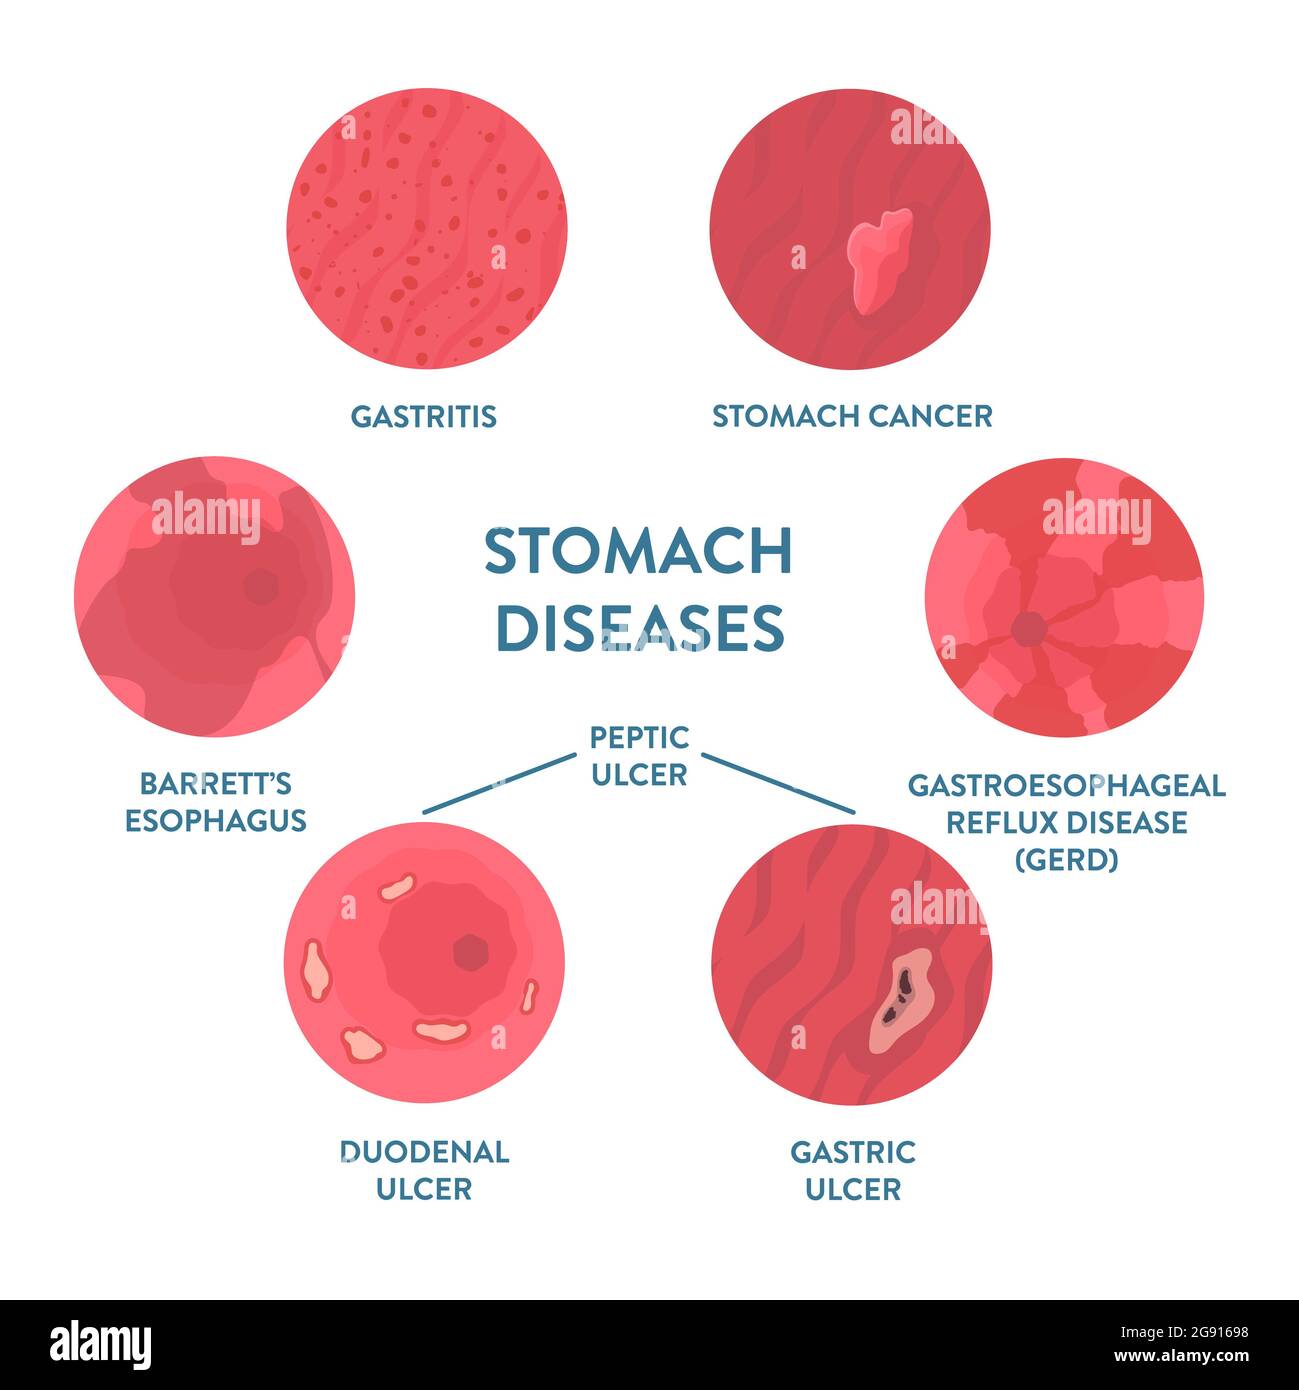 Stomach diseases, illustration Stock Photo